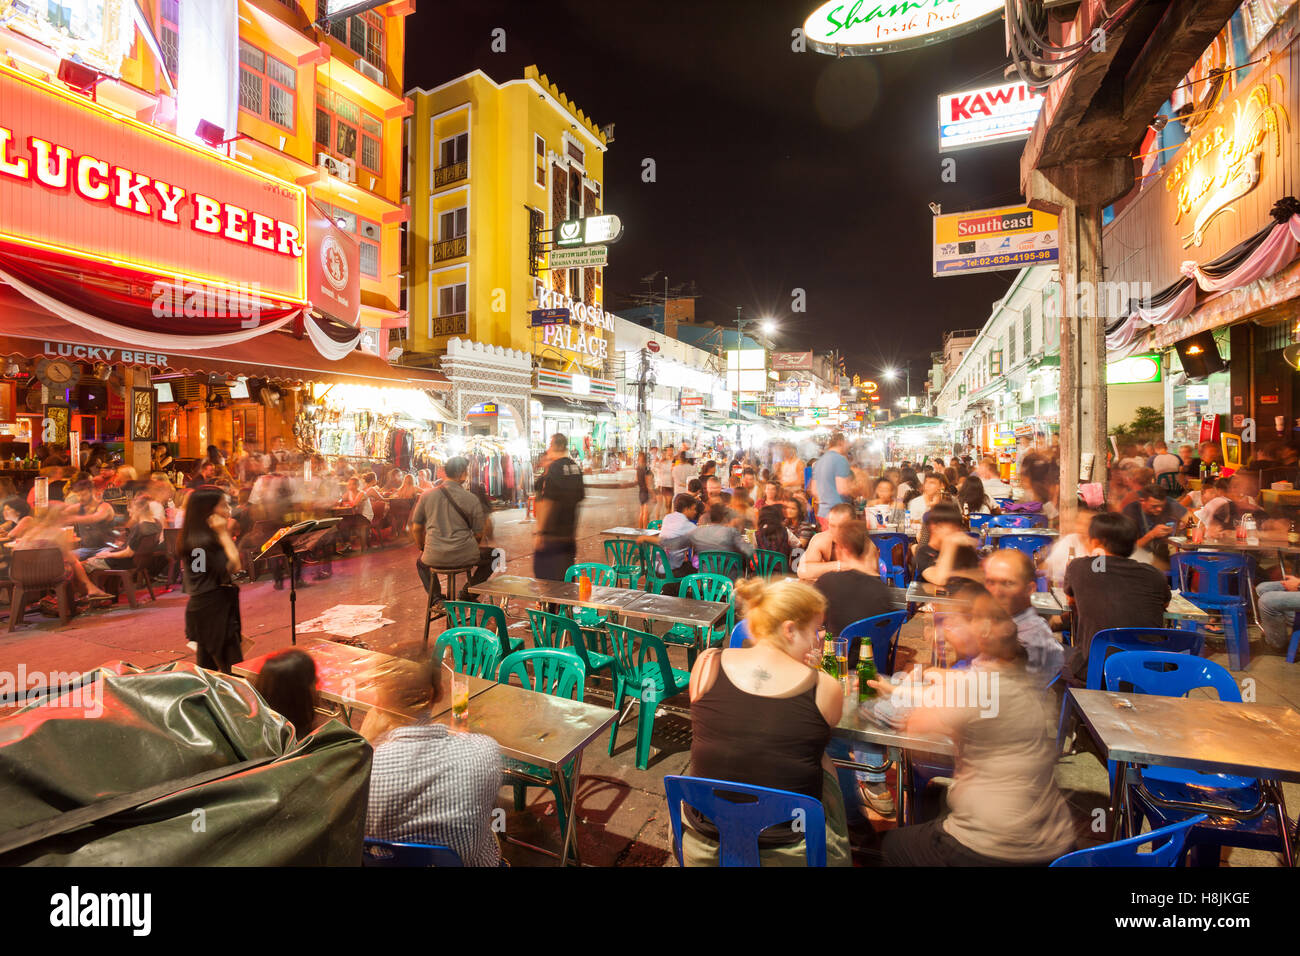 BANGKOK - 20 OTT 2016: stand gastronomici, bar e negozi turistici linea Khao San Road a ottobre 20, 2016 a Bangkok Foto Stock